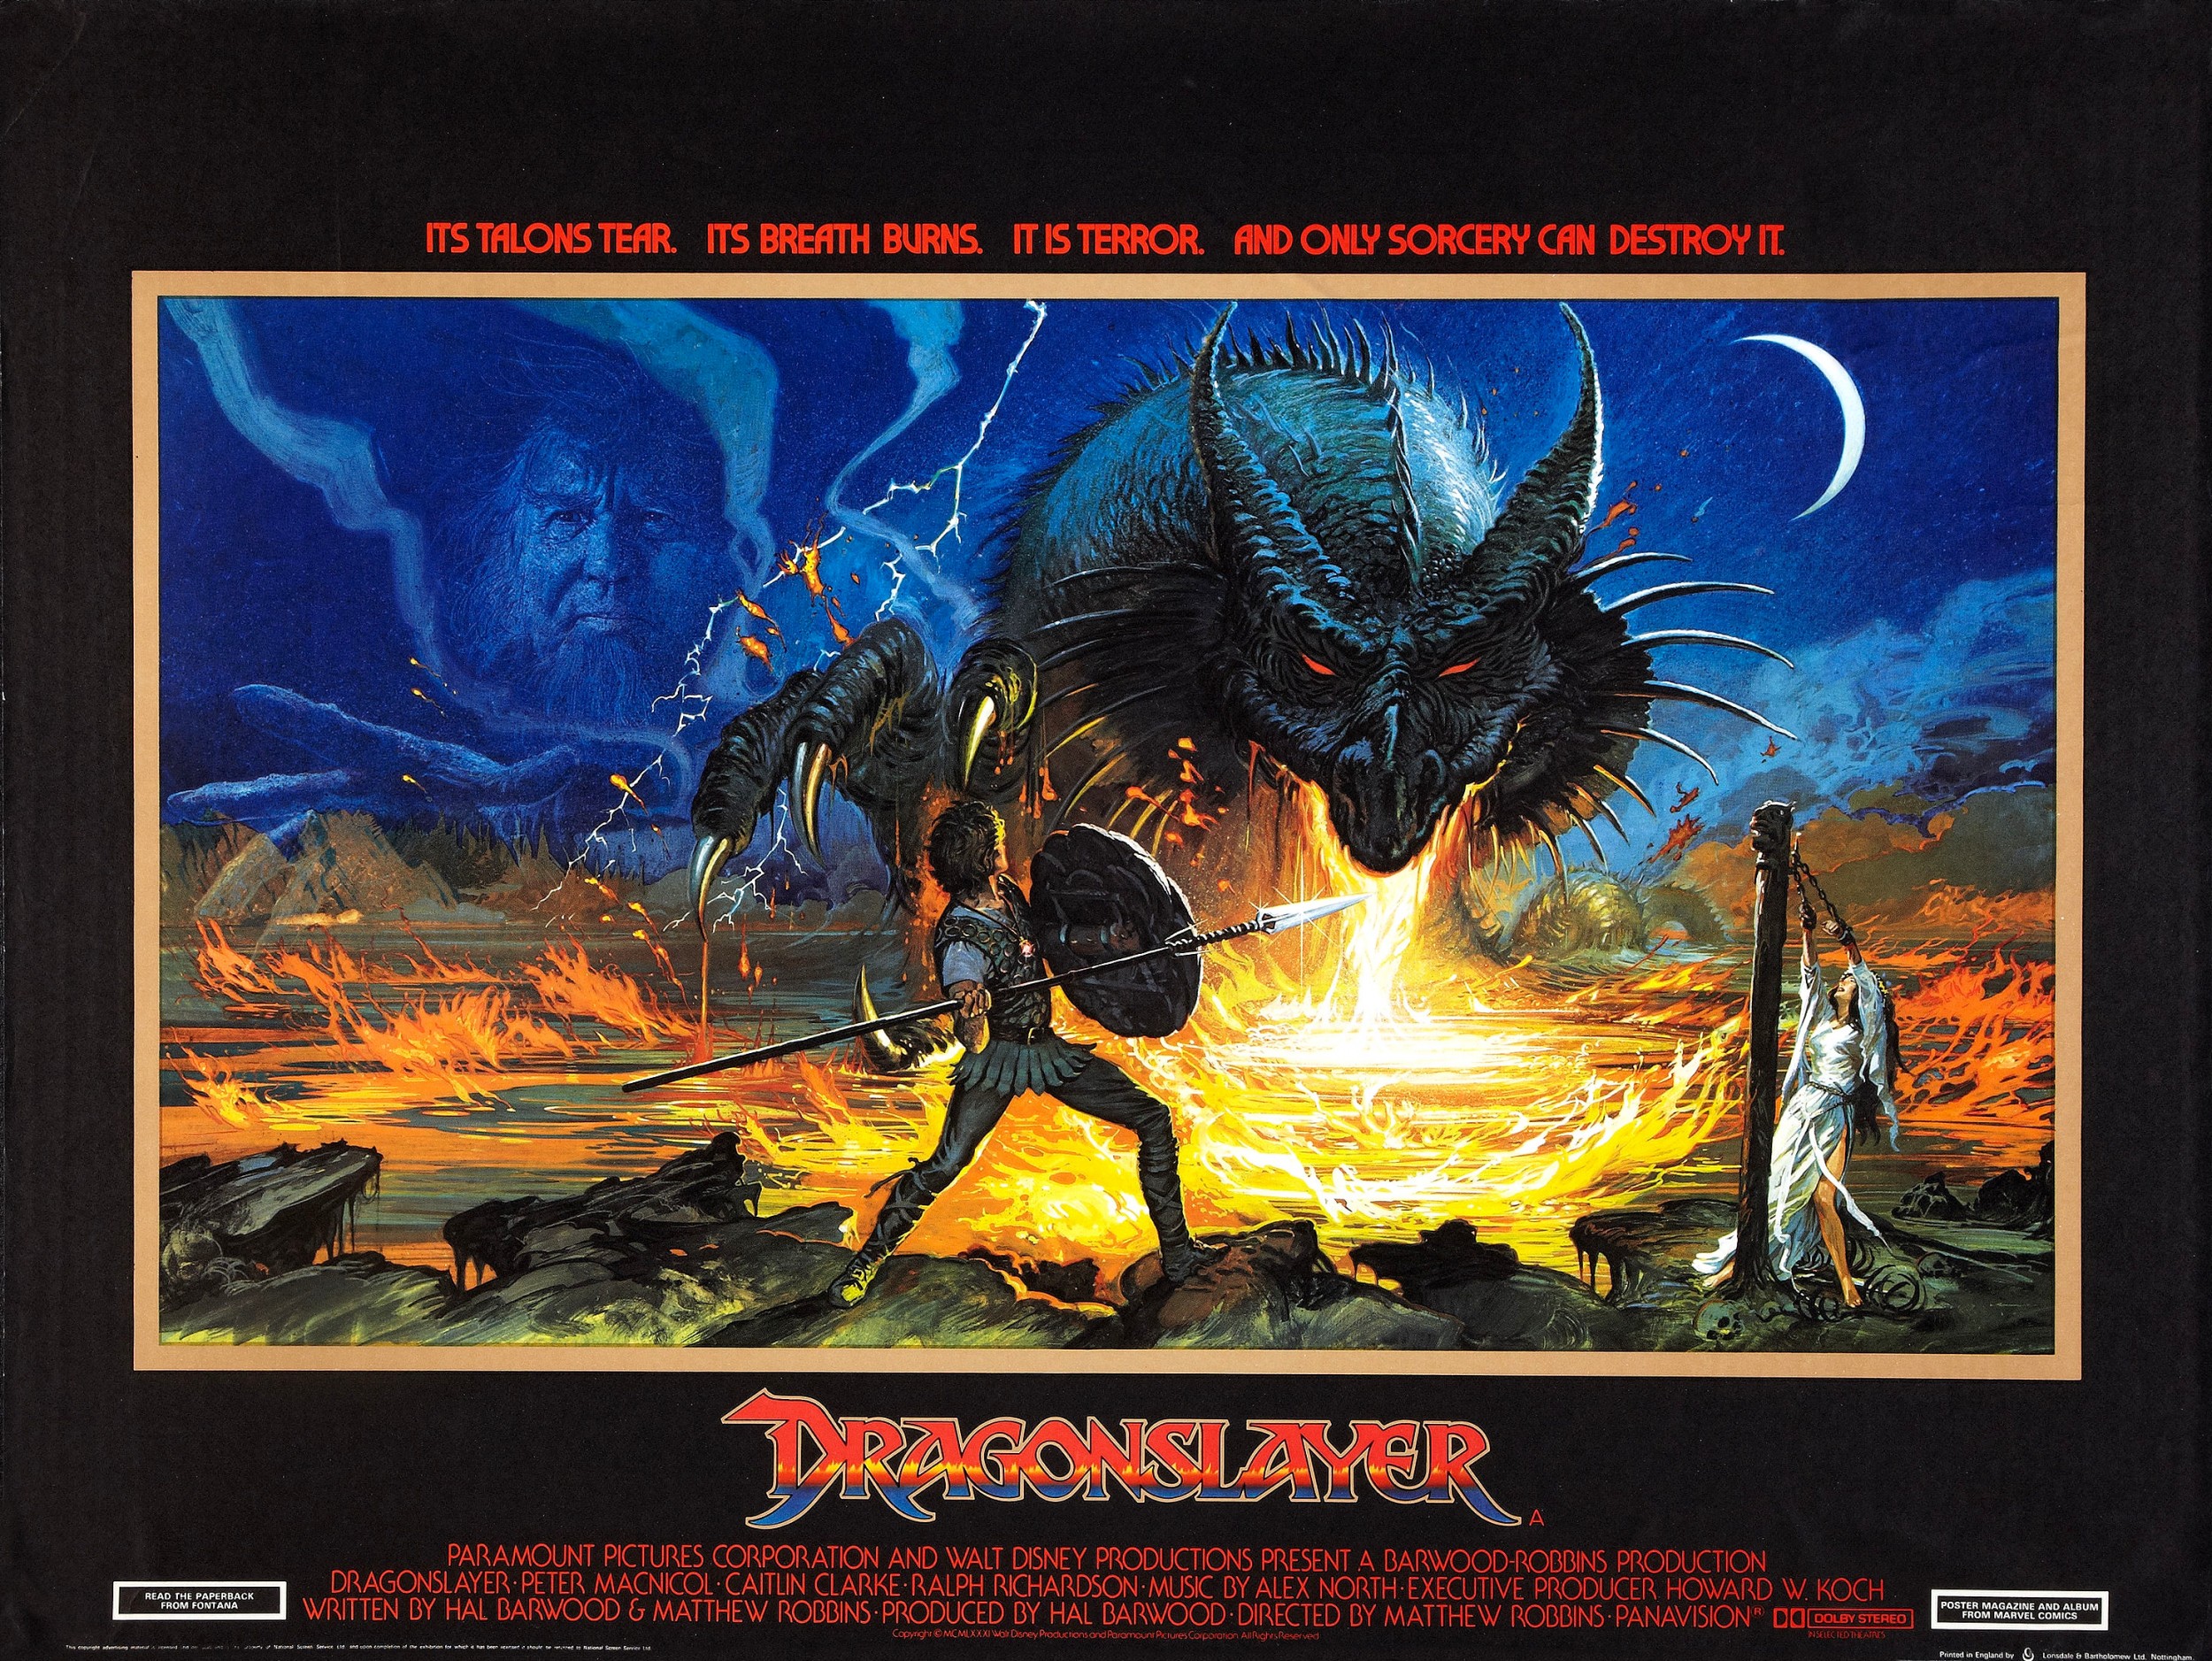 Mega Sized Movie Poster Image for Dragonslayer (#4 of 5)